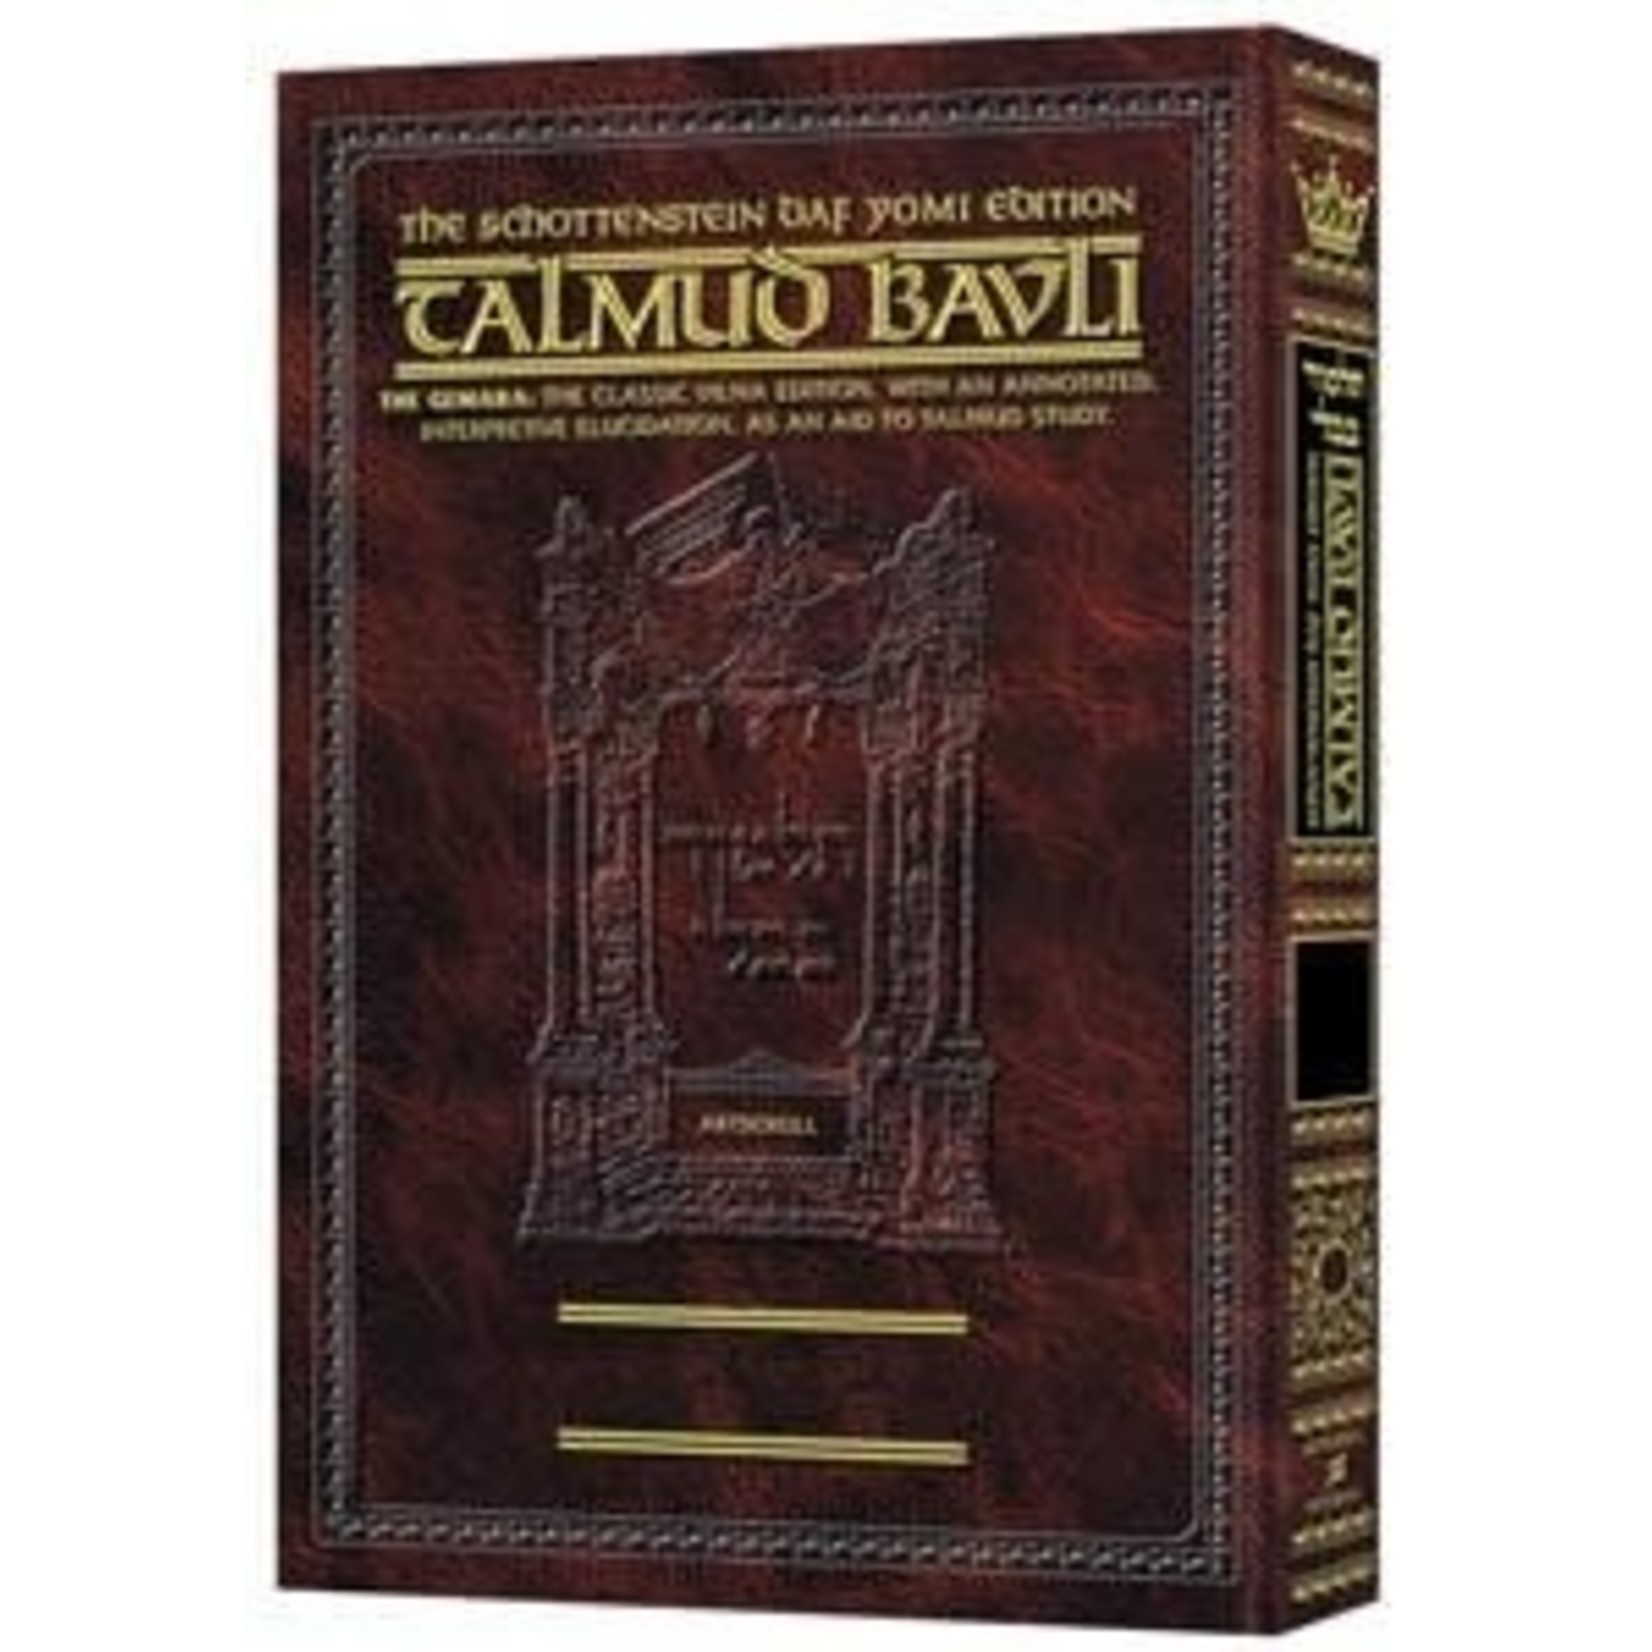 YEVAMOS 1 - ArtScroll Schottenstein Hebrew/English Talmud Bavli, Daf Yomi Size